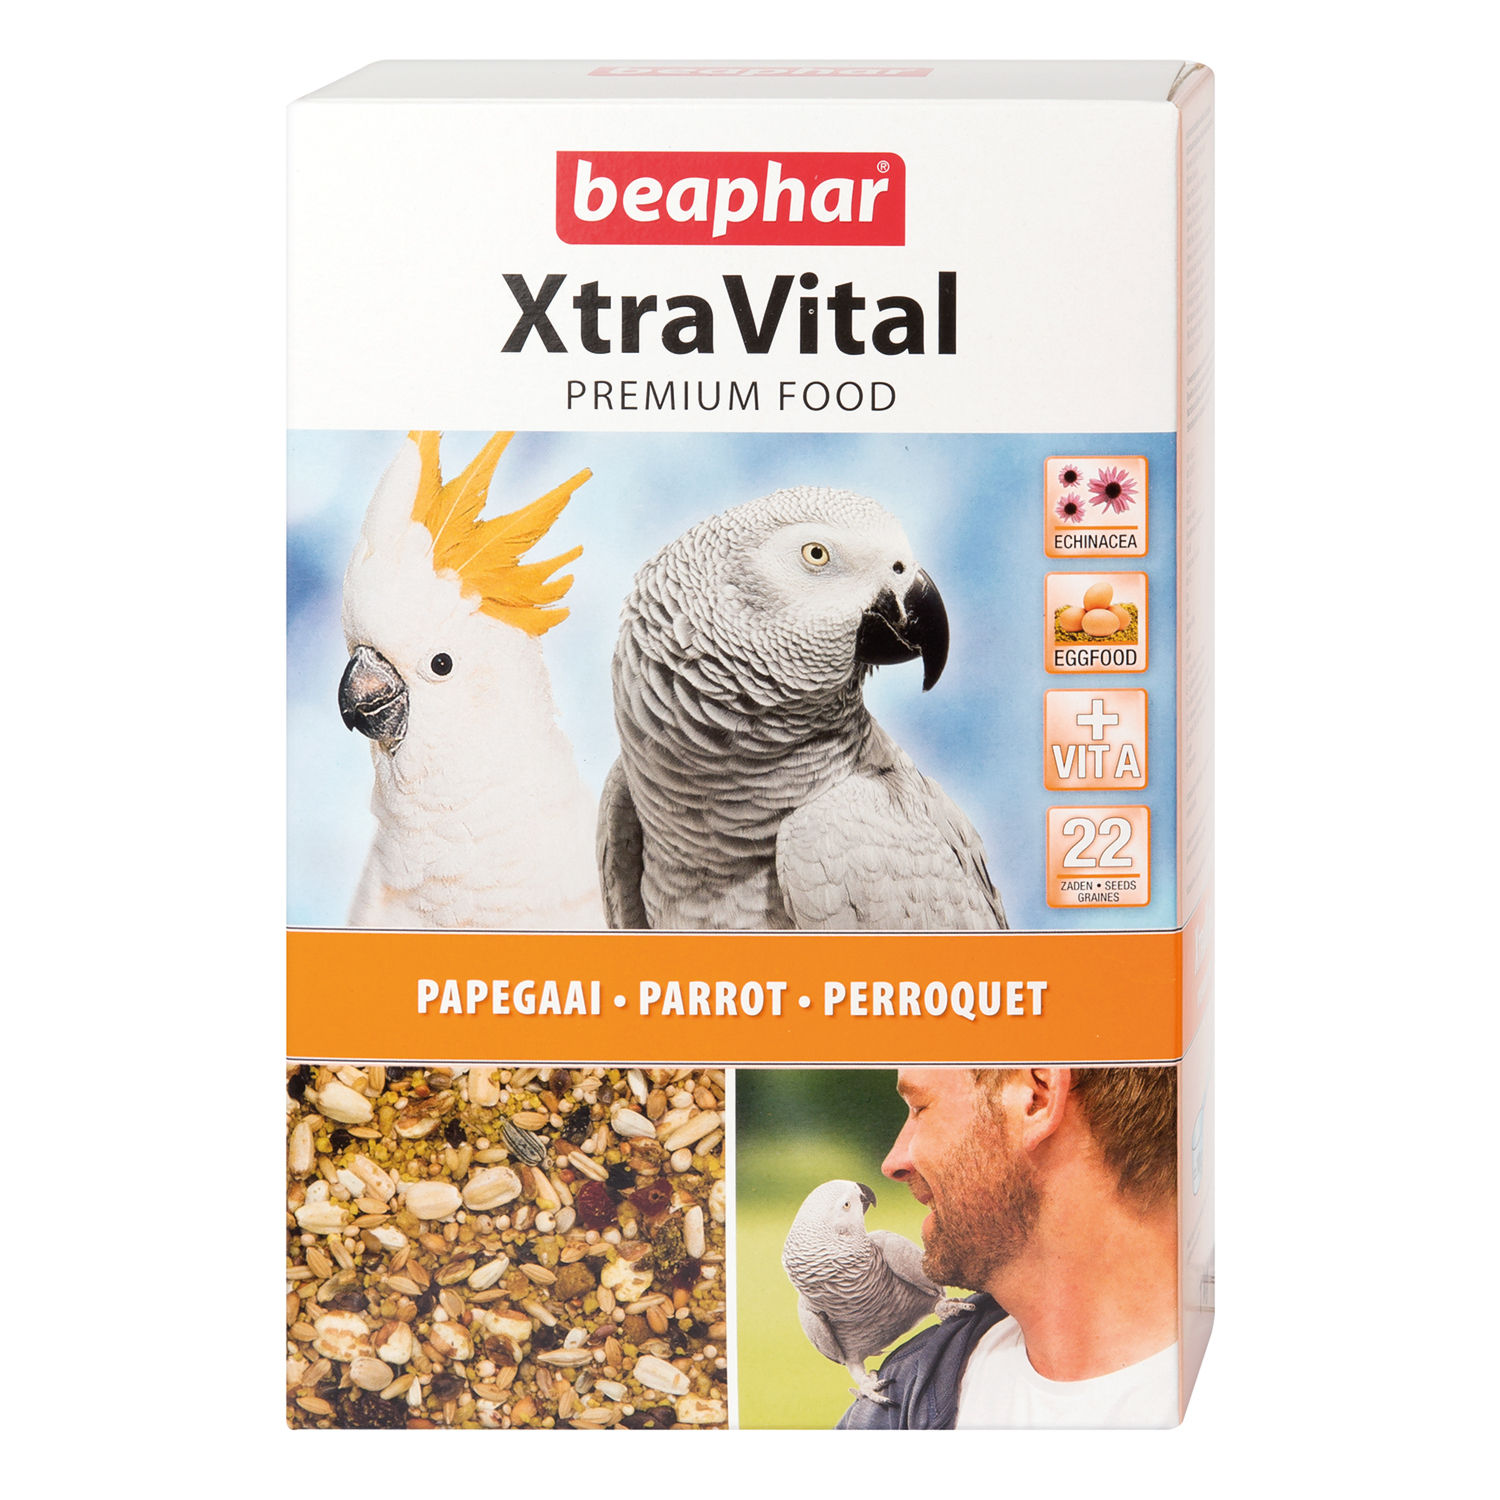 Beaphar XtraVital Premium Food for Parrots Image